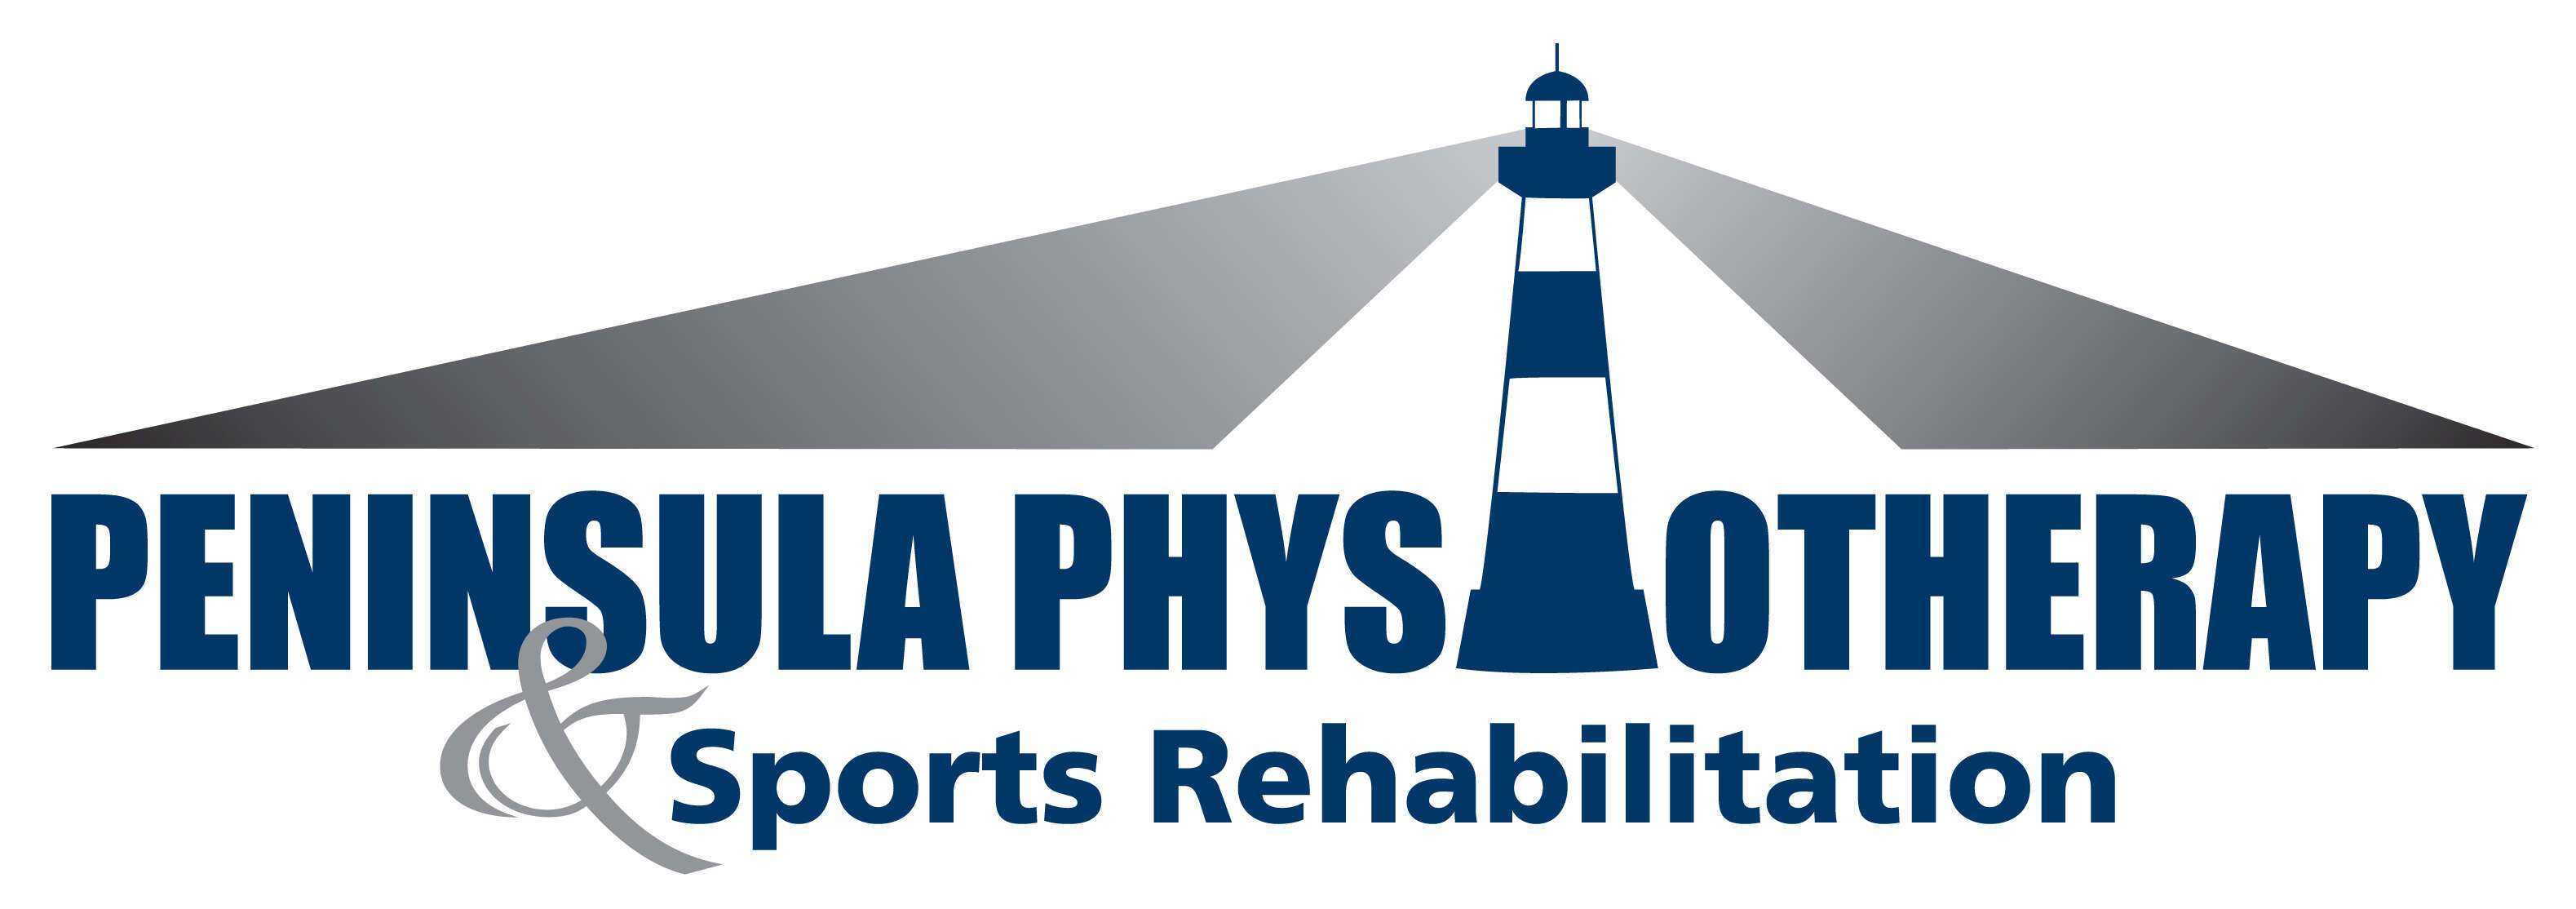 Peninsula Physiotherapy & Sports Rehabilitation